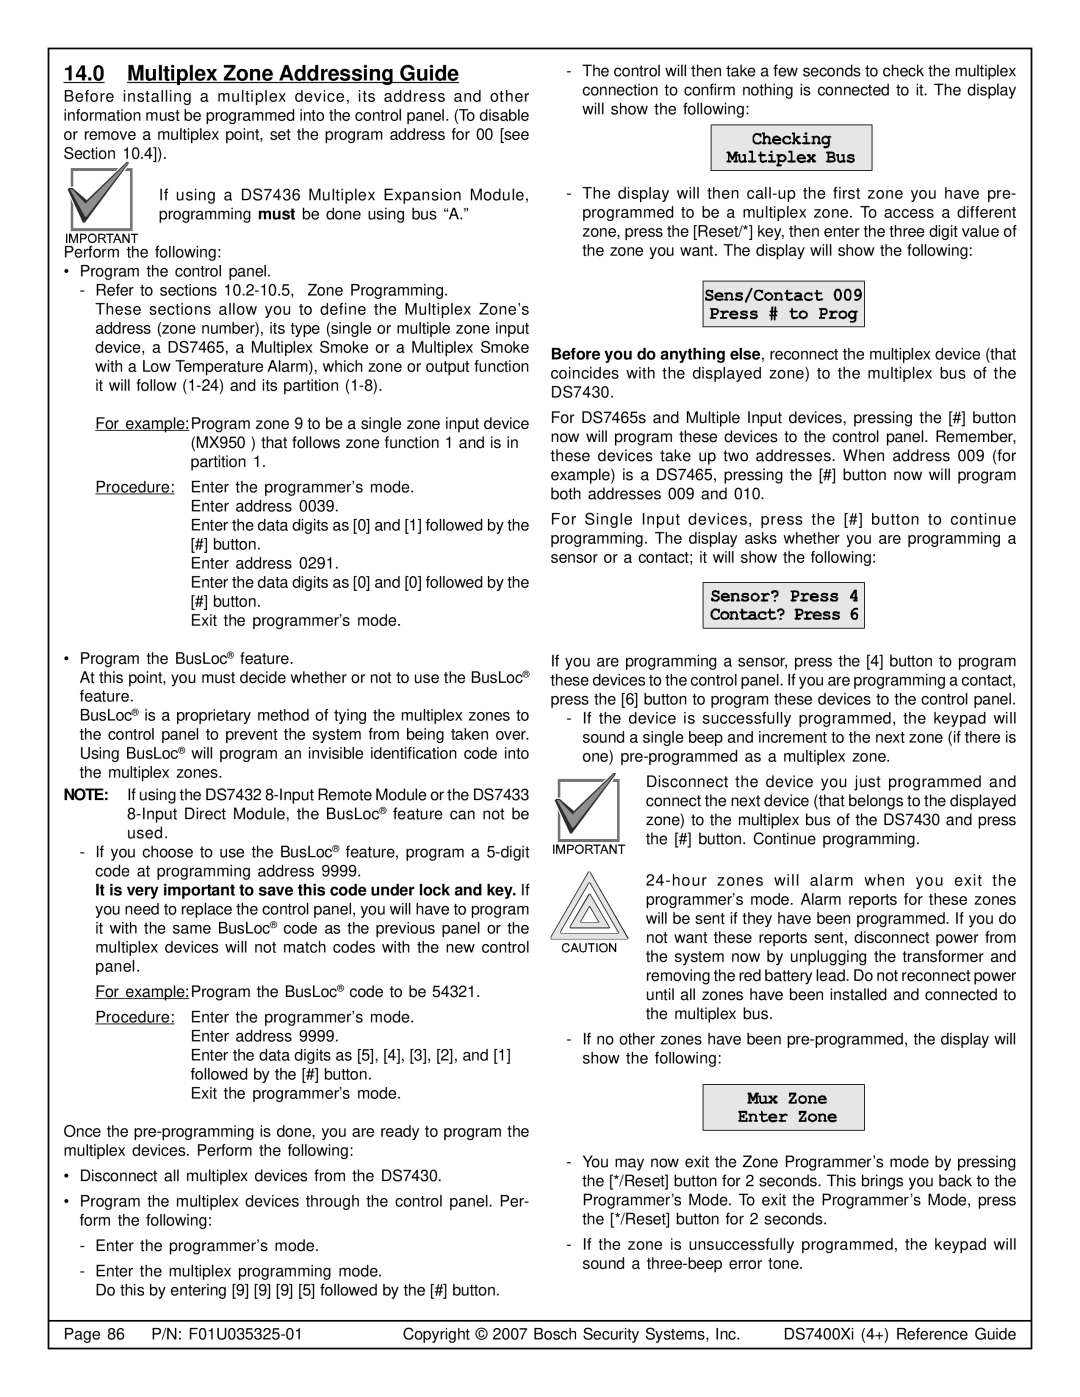 Bosch Appliances DS7400XI, DS7445I, DS7447E manual 14.0Multiplex Zone Addressing Guide 